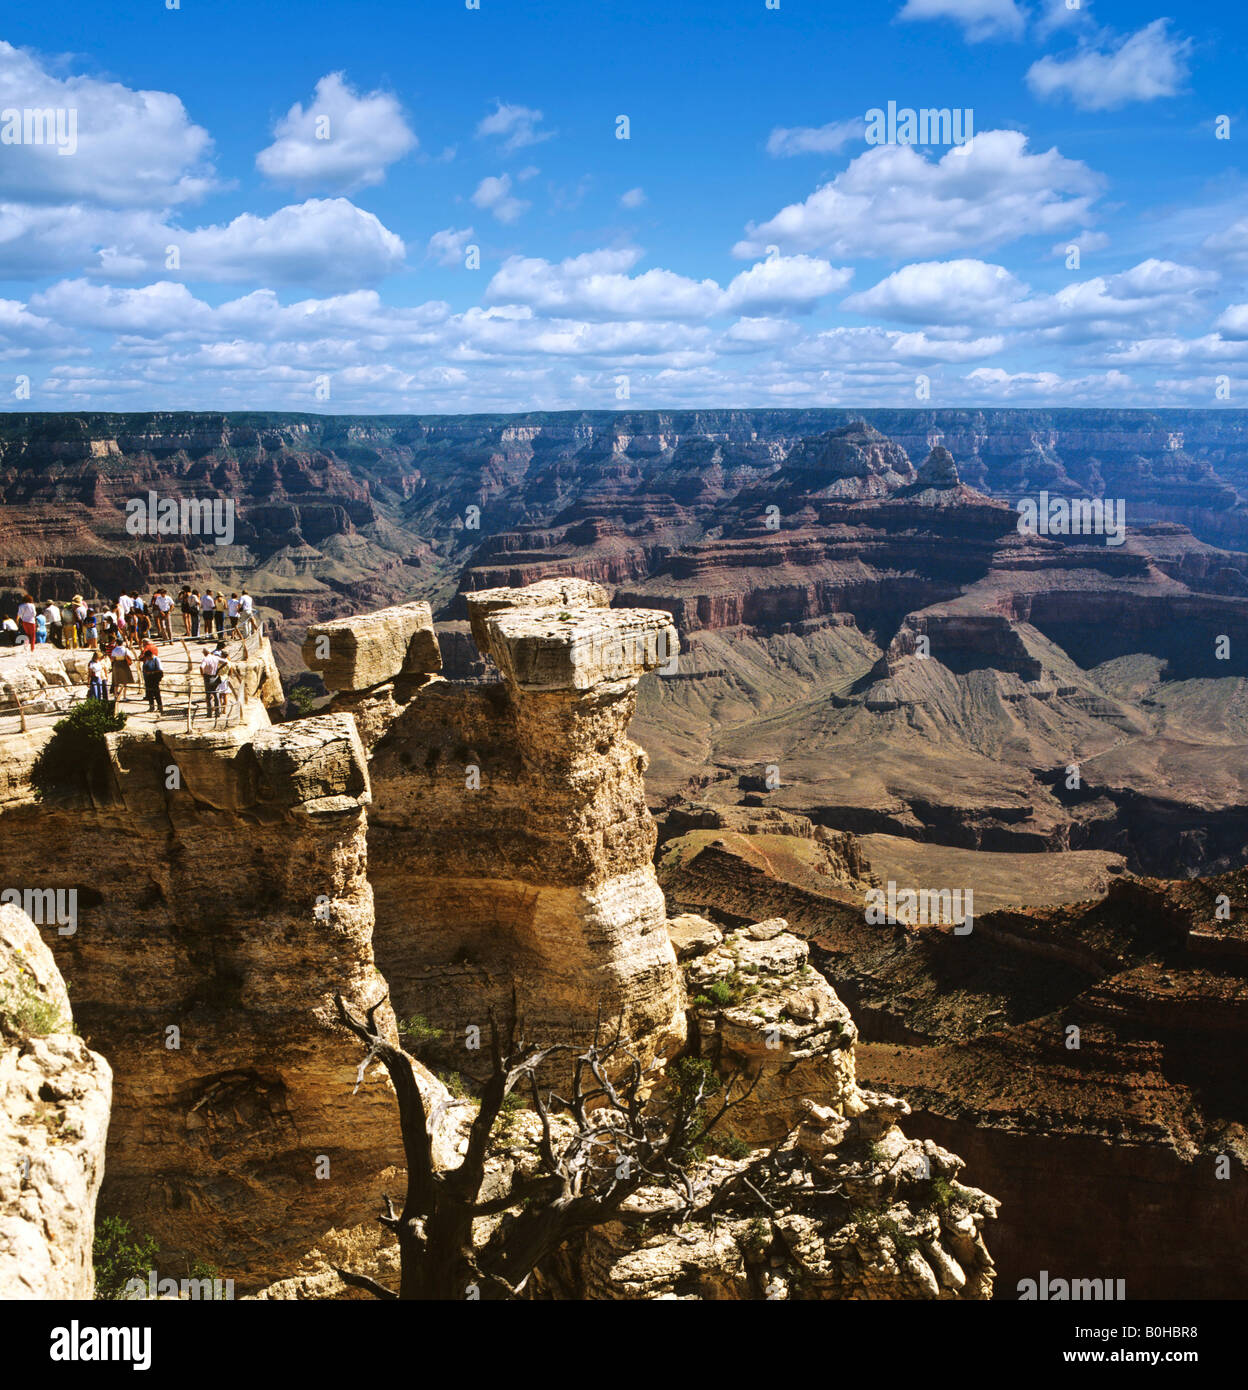 Il Grand Canyon, Lookout Point, Colorado Colorado Plateau, Arizona, Stati Uniti d'America Foto Stock